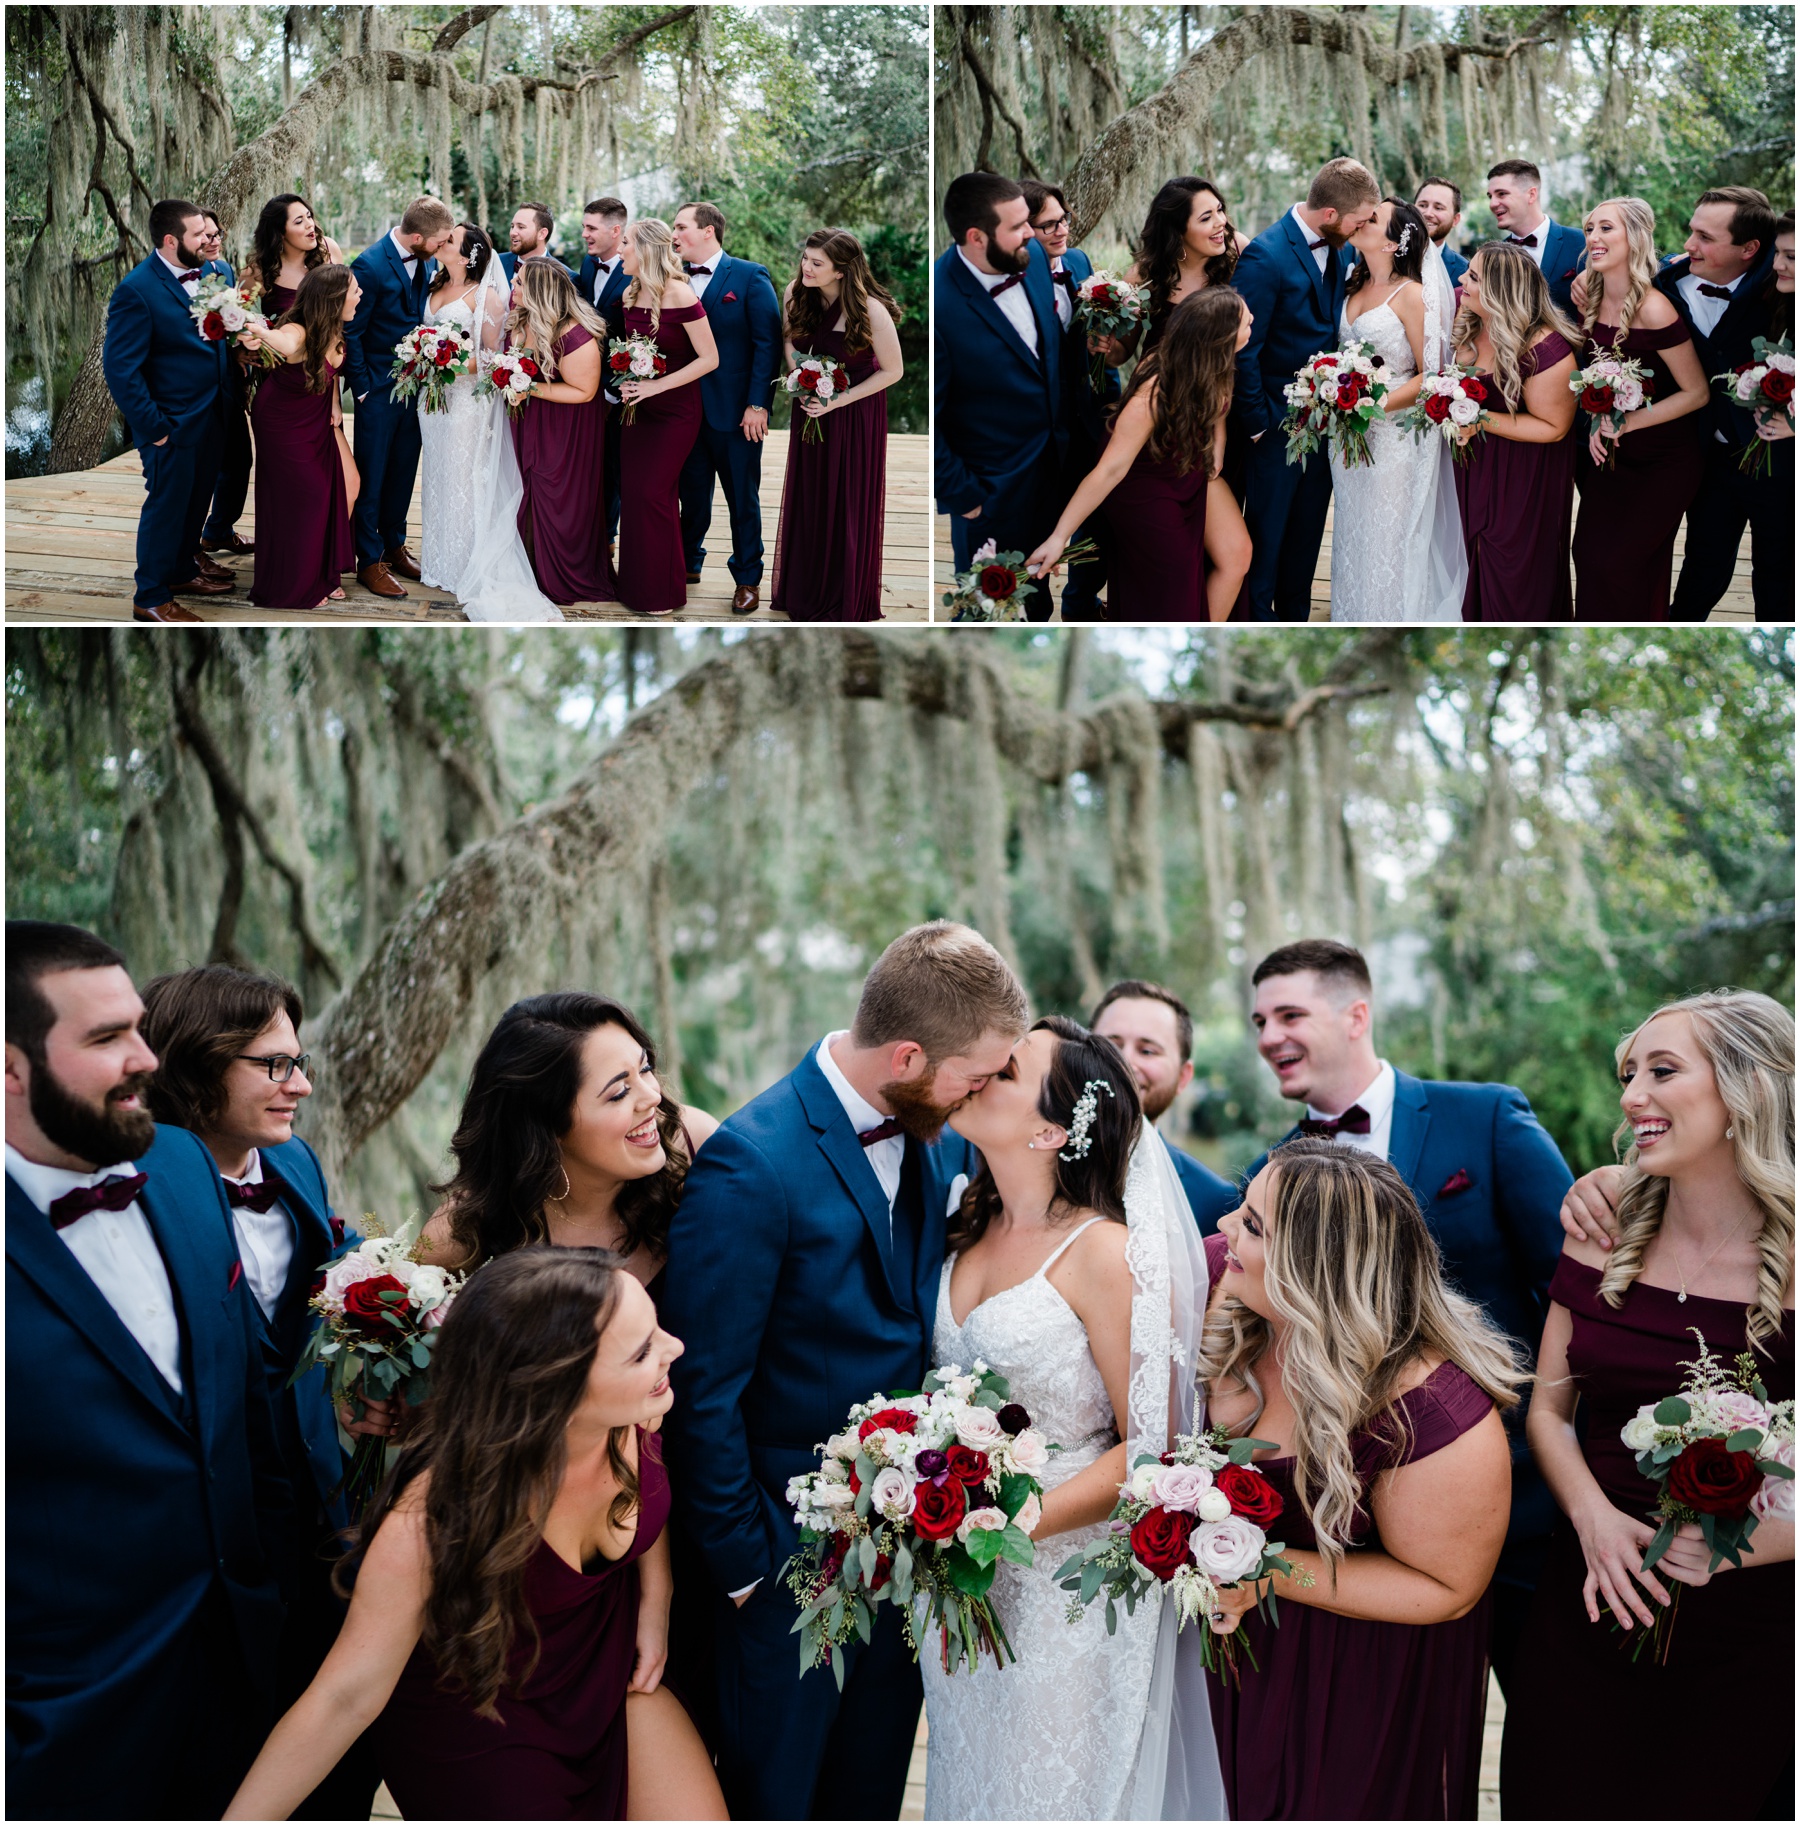 Florida winter wedding captured by Fort Myers wedding photographer